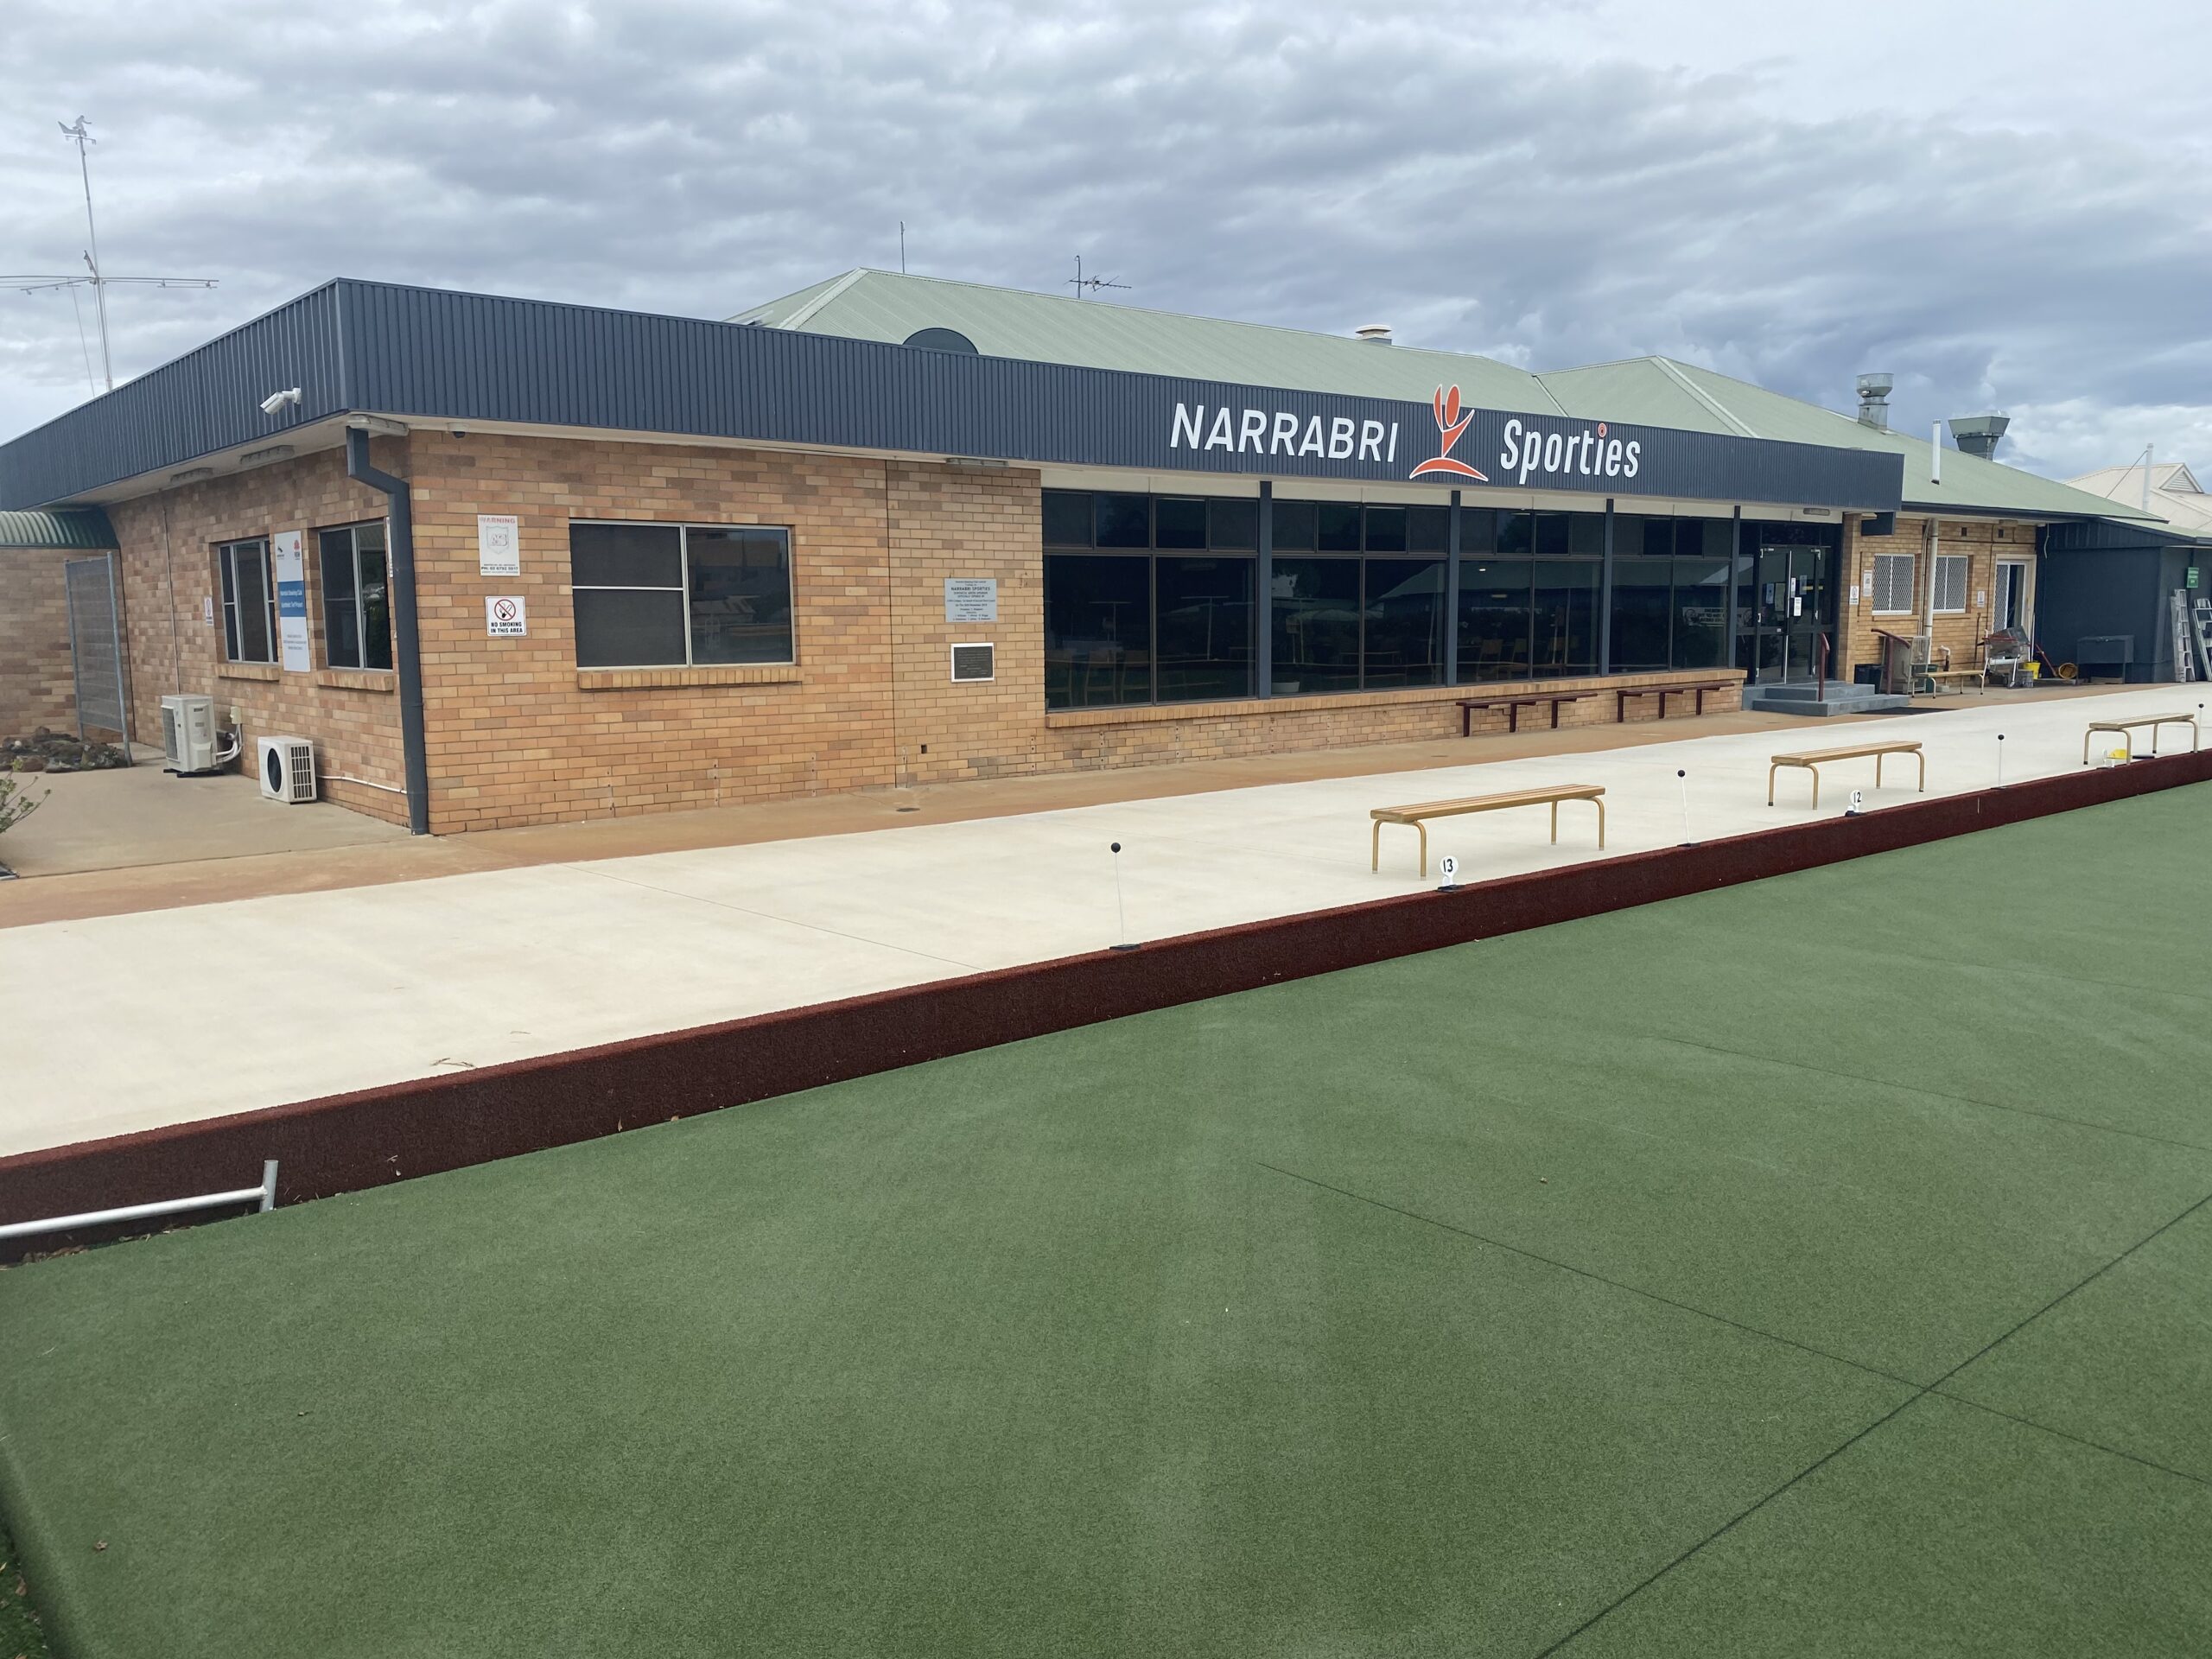 Narrabri Bowling Club will be managed by Club Narrabri in an initiative which may lead to amalgamation.